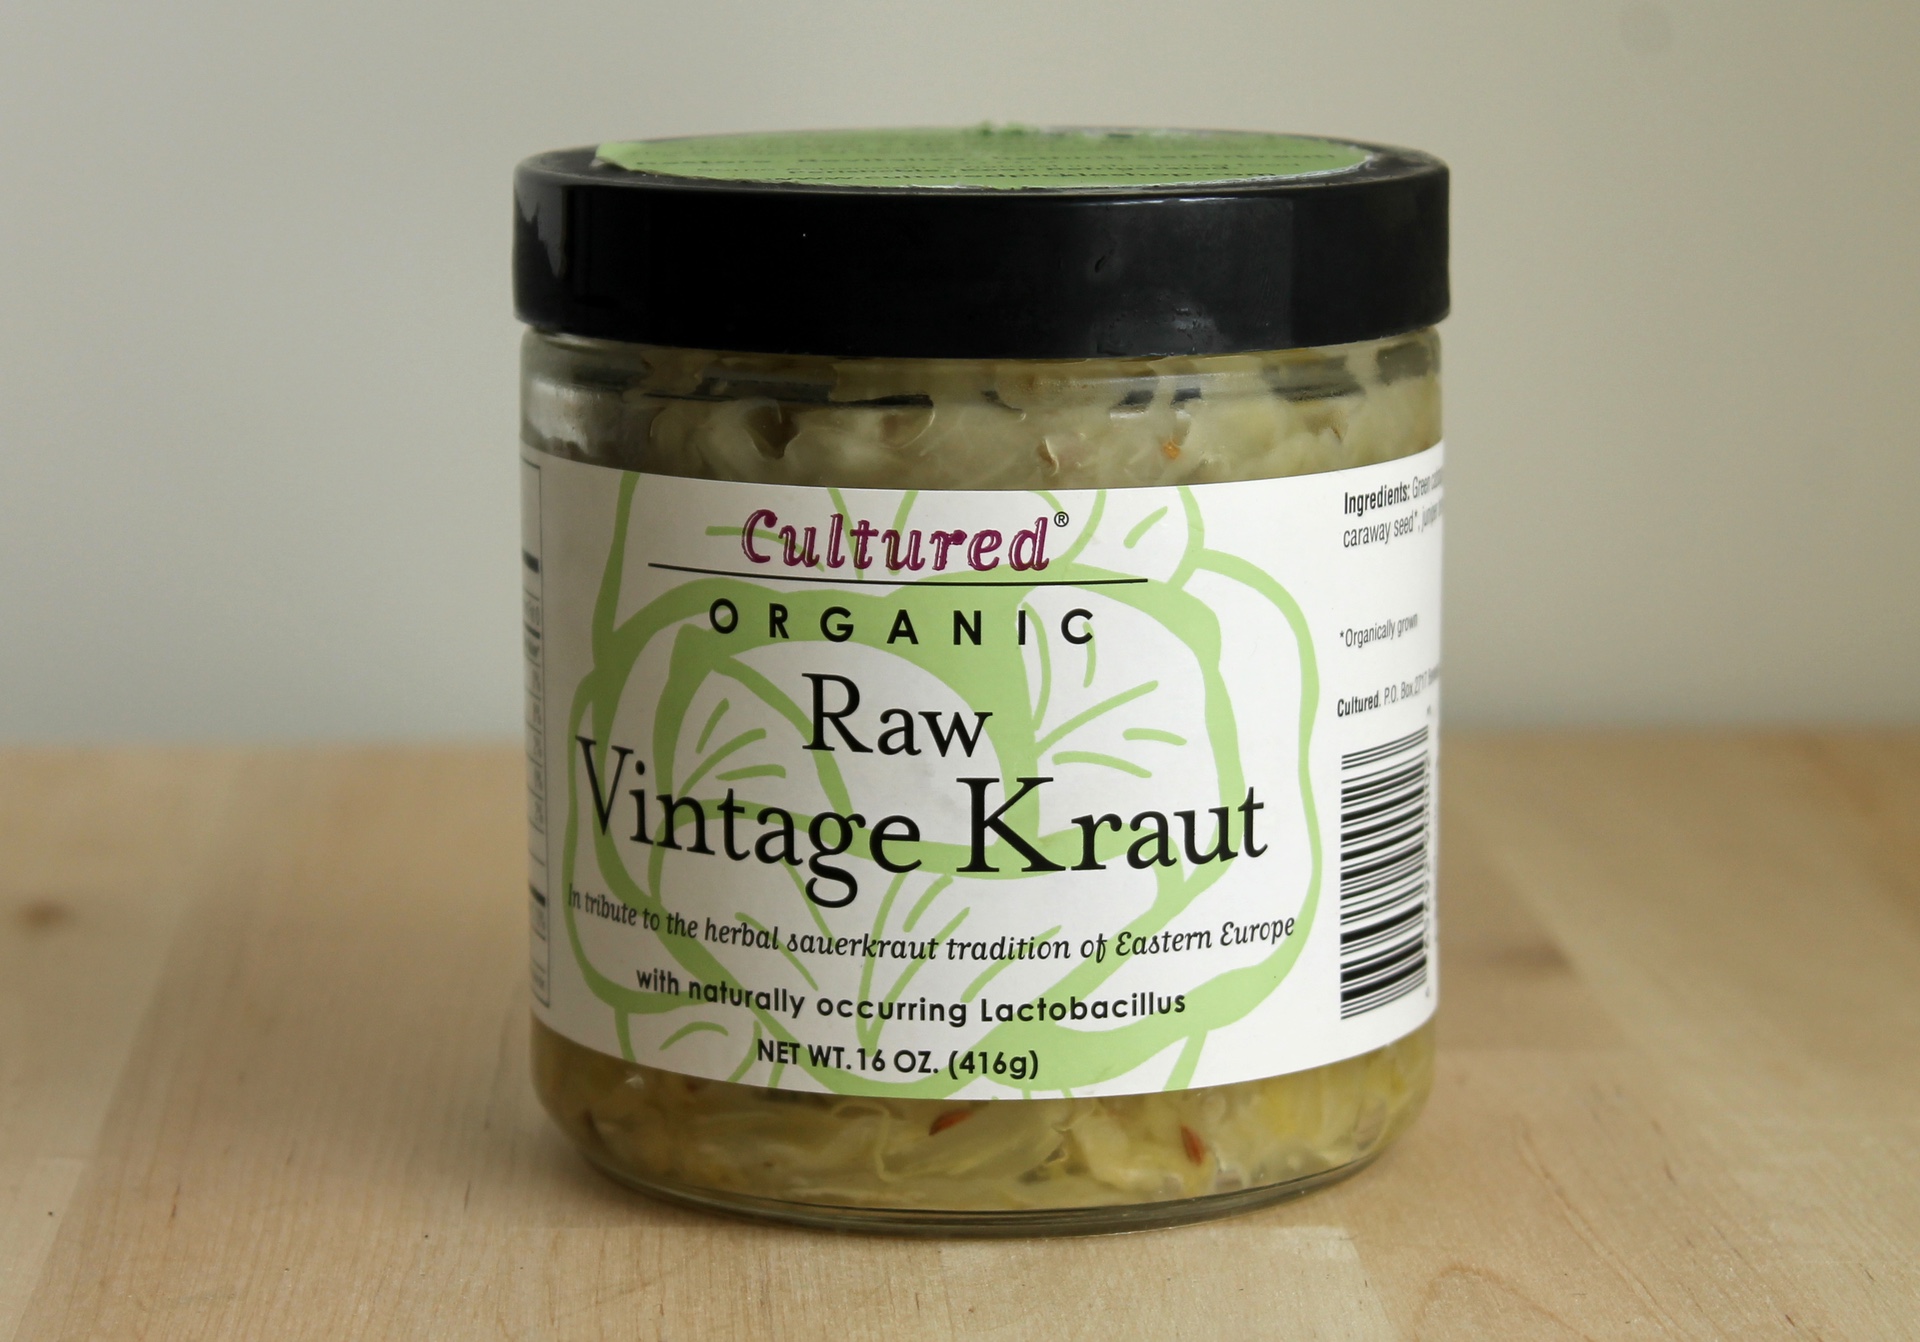 Cultured Organic sauerkraut.